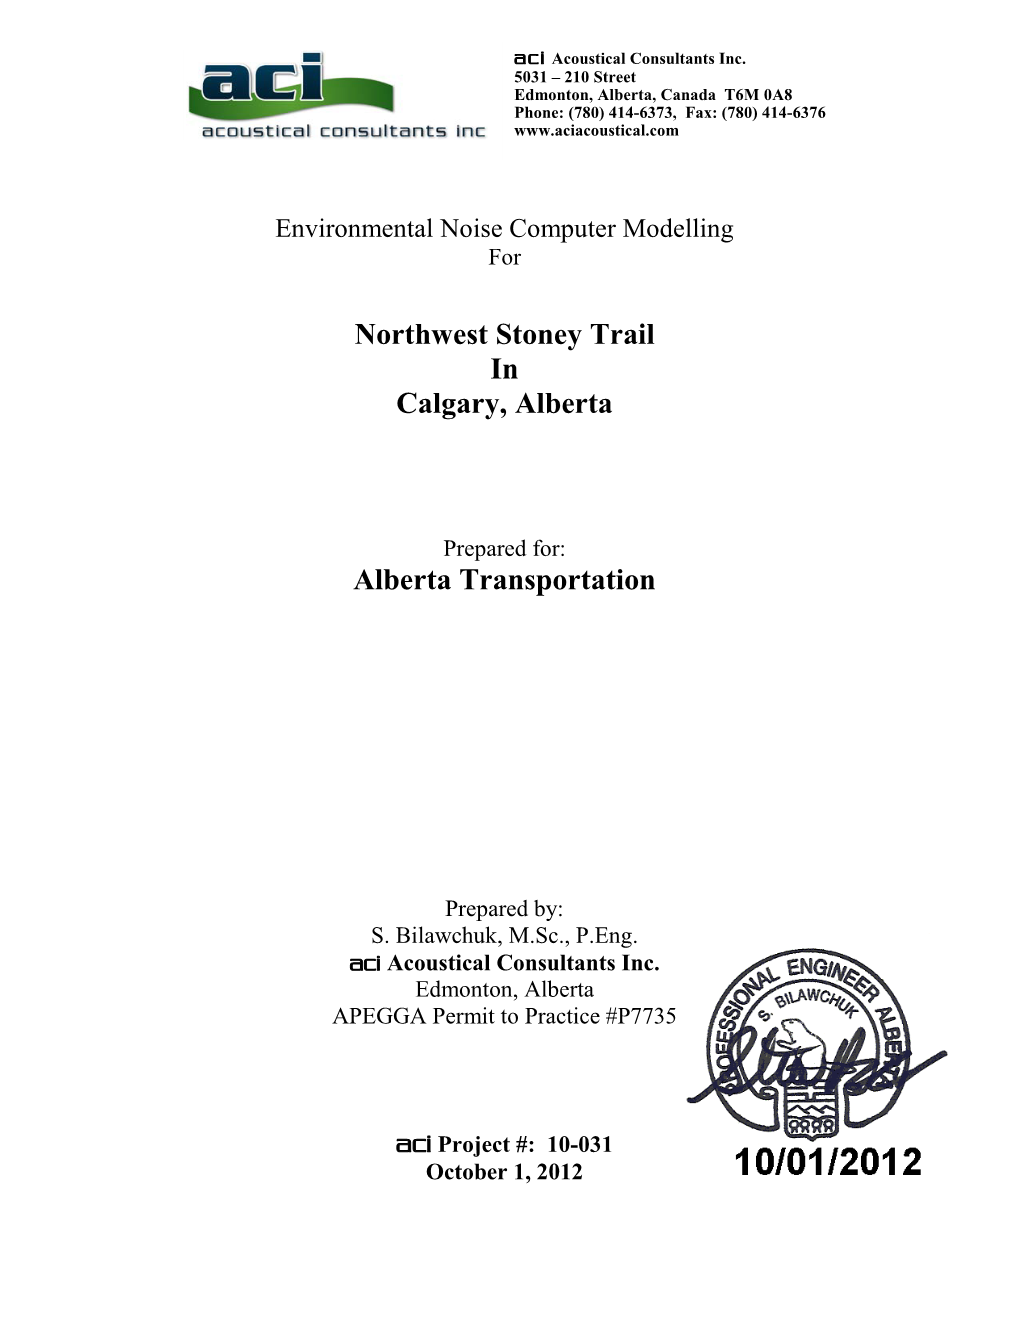 Environmental Noise Computer Modelling for Northwest Stoney Trail